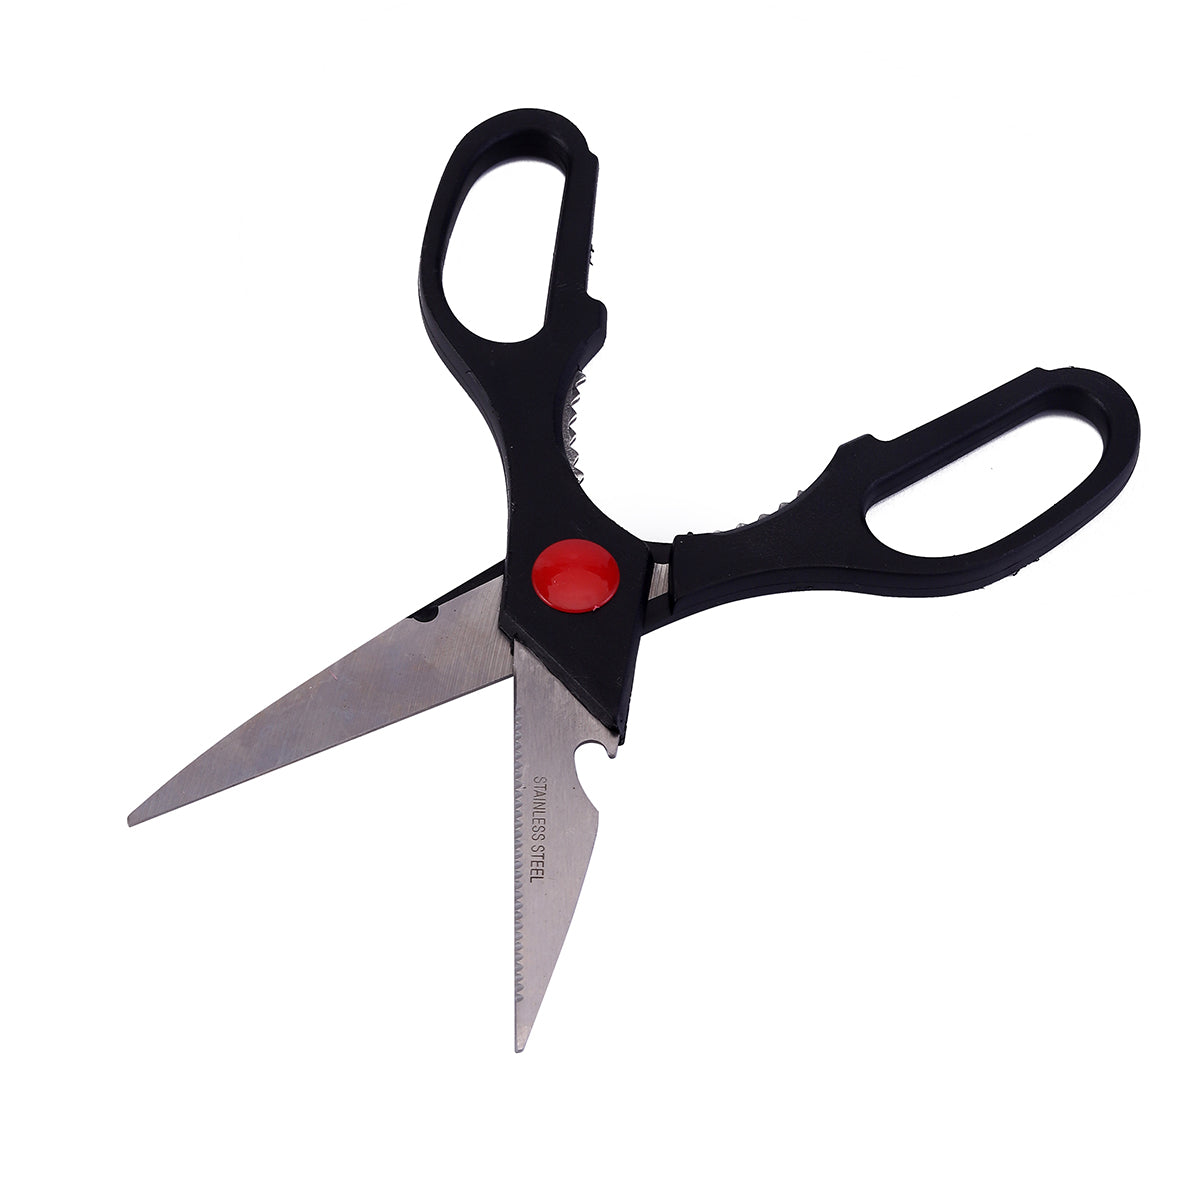 Black scissor - 8inch